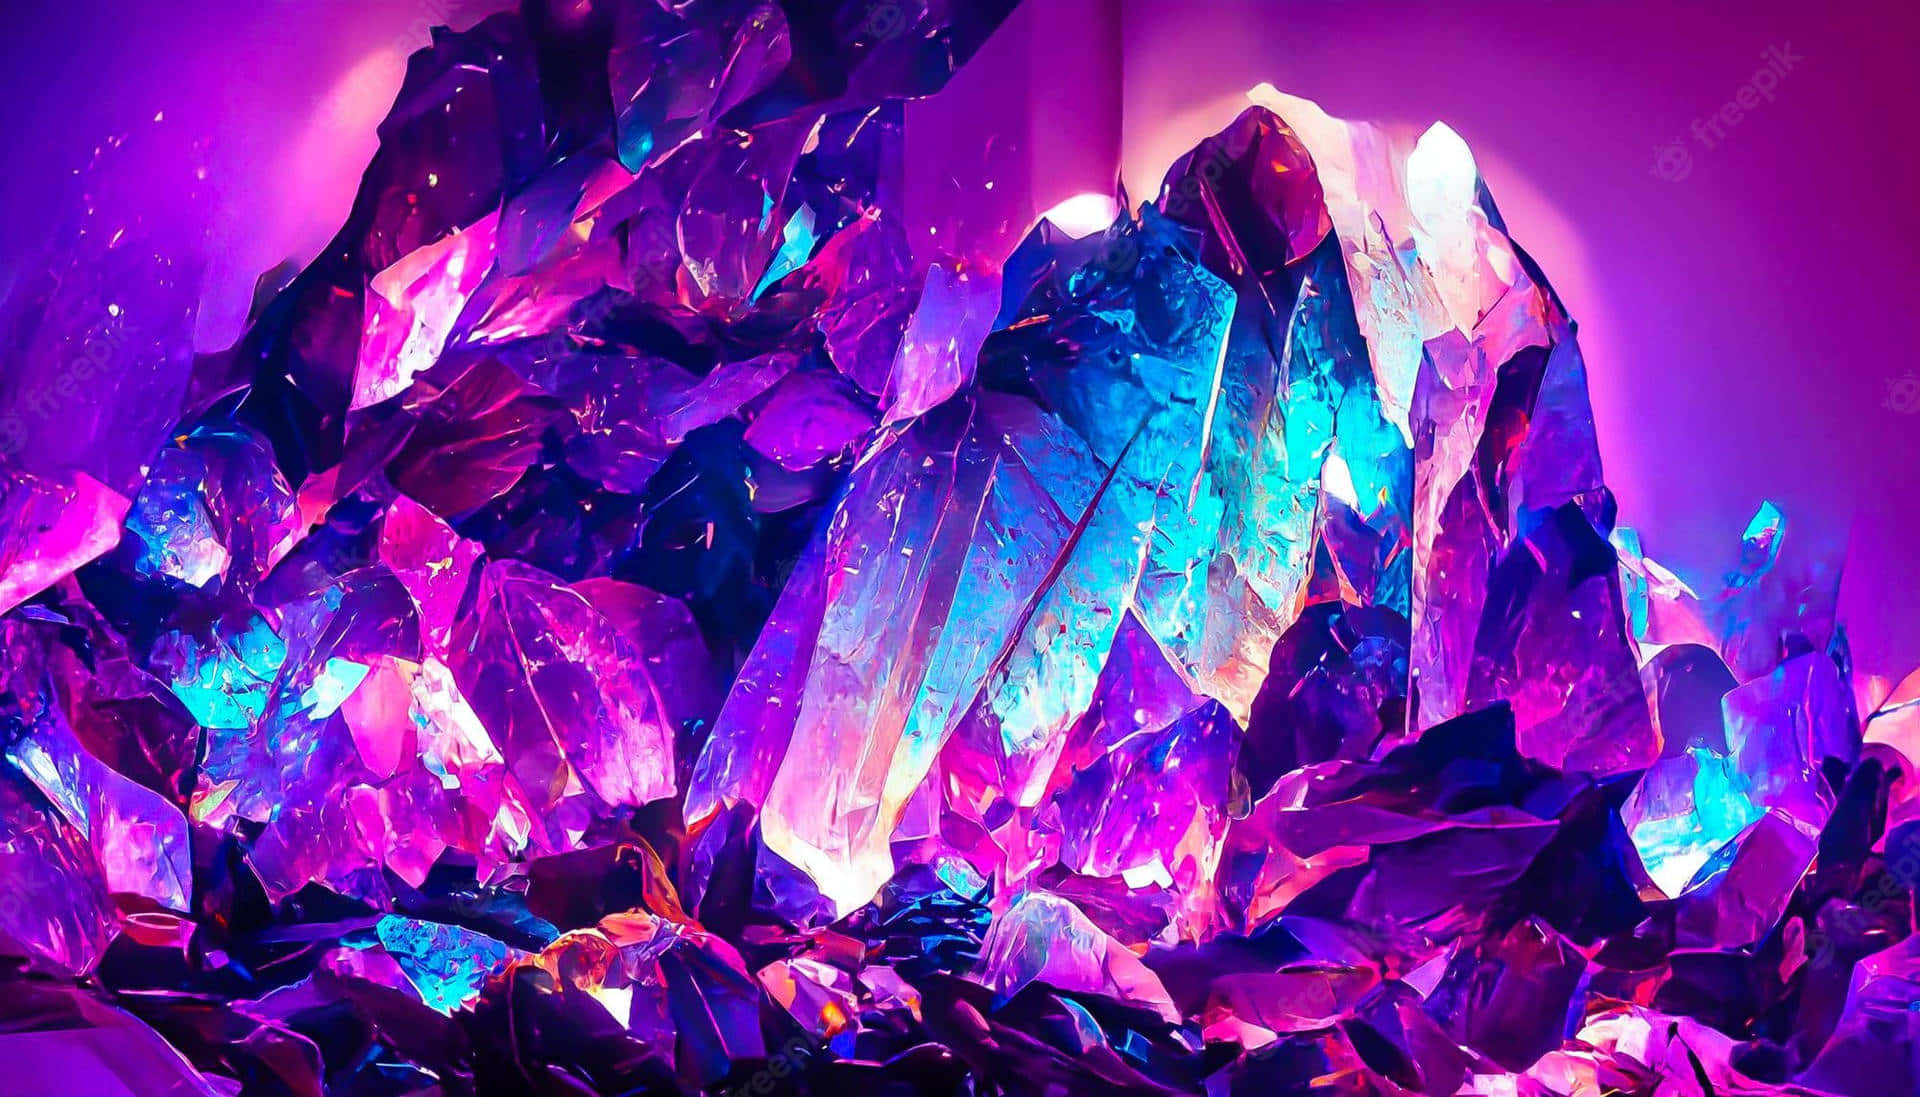 Illuminate Your World with Stunning Crystals